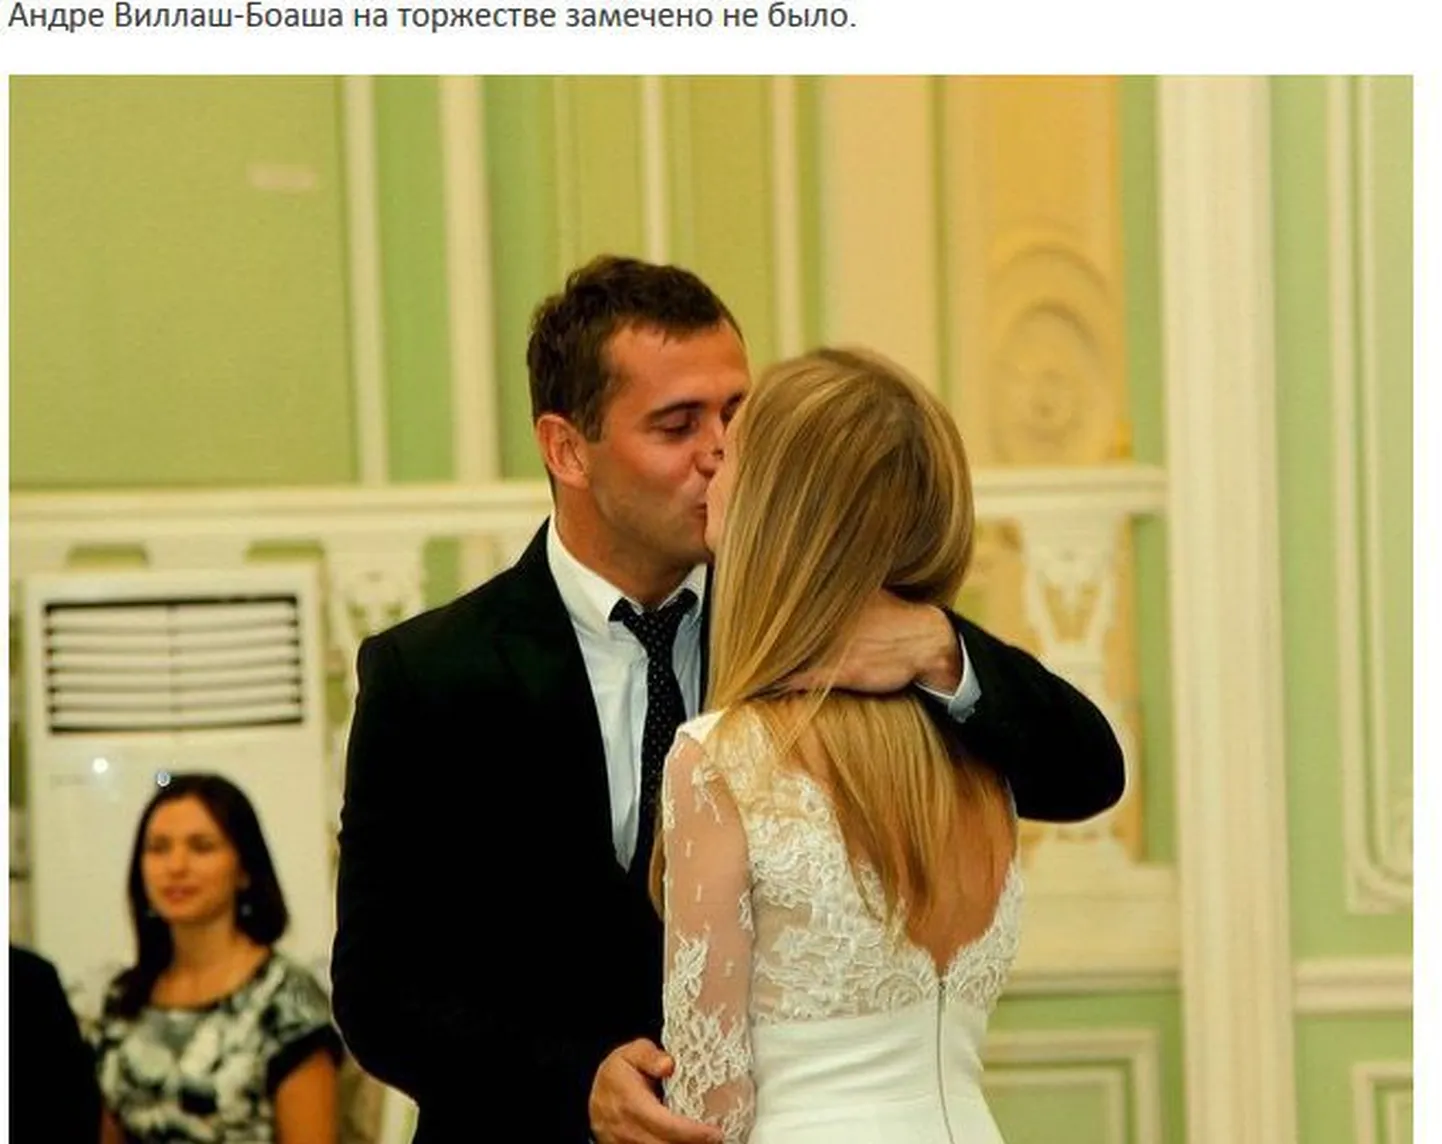 Александр Кержаков во время церемонии регистрации брака